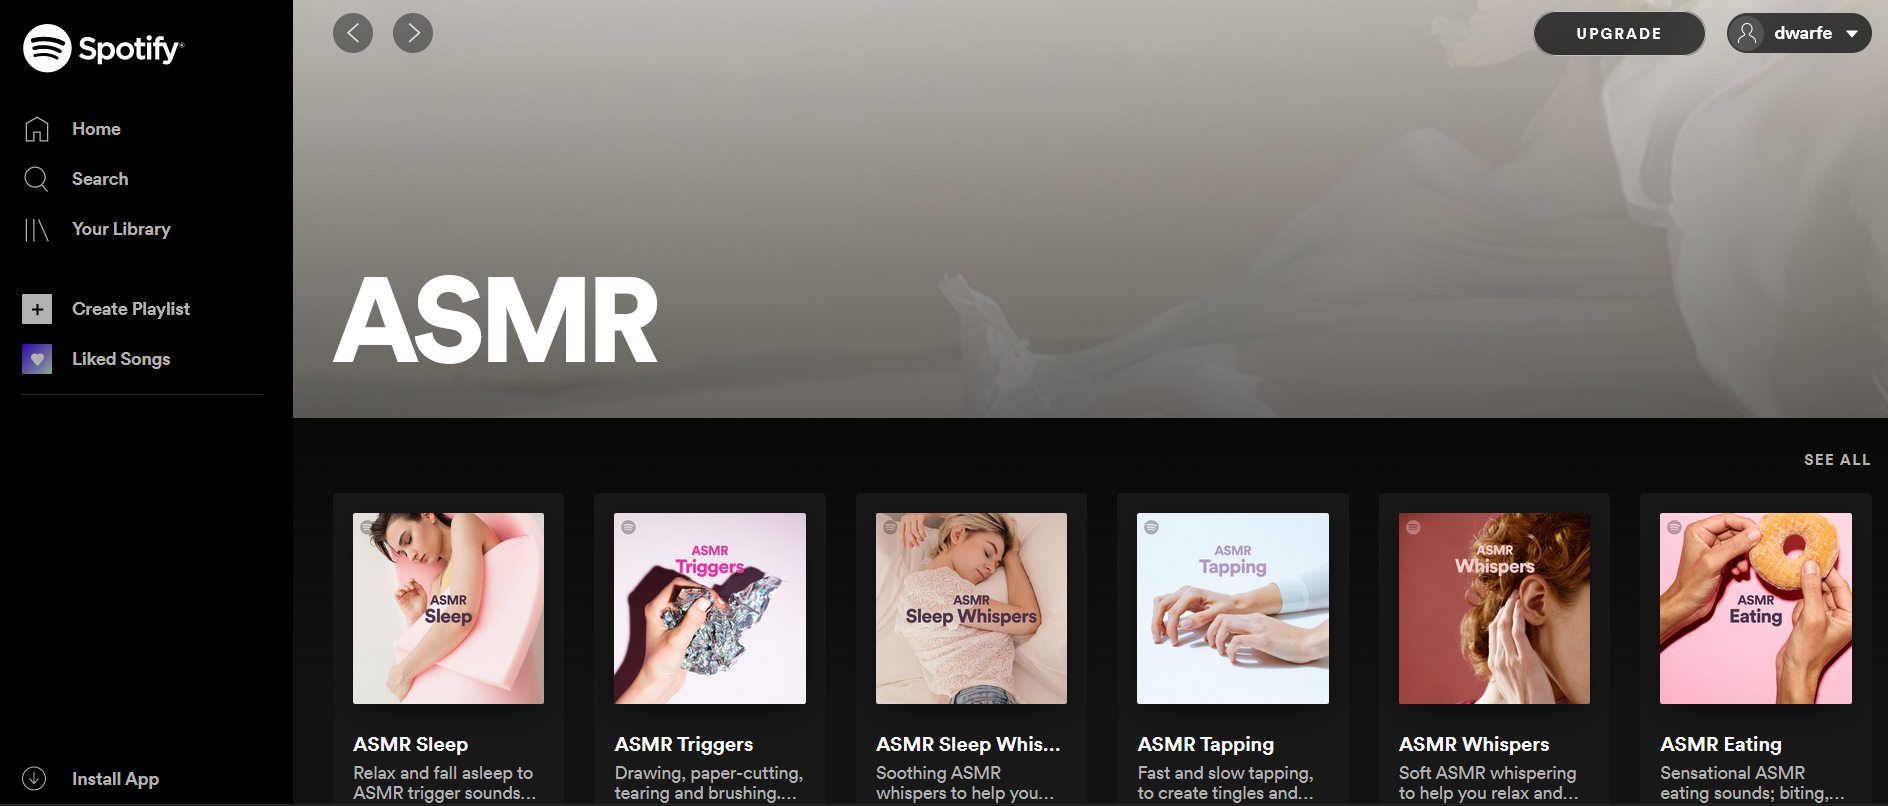 ASMR Tracks on Spotify